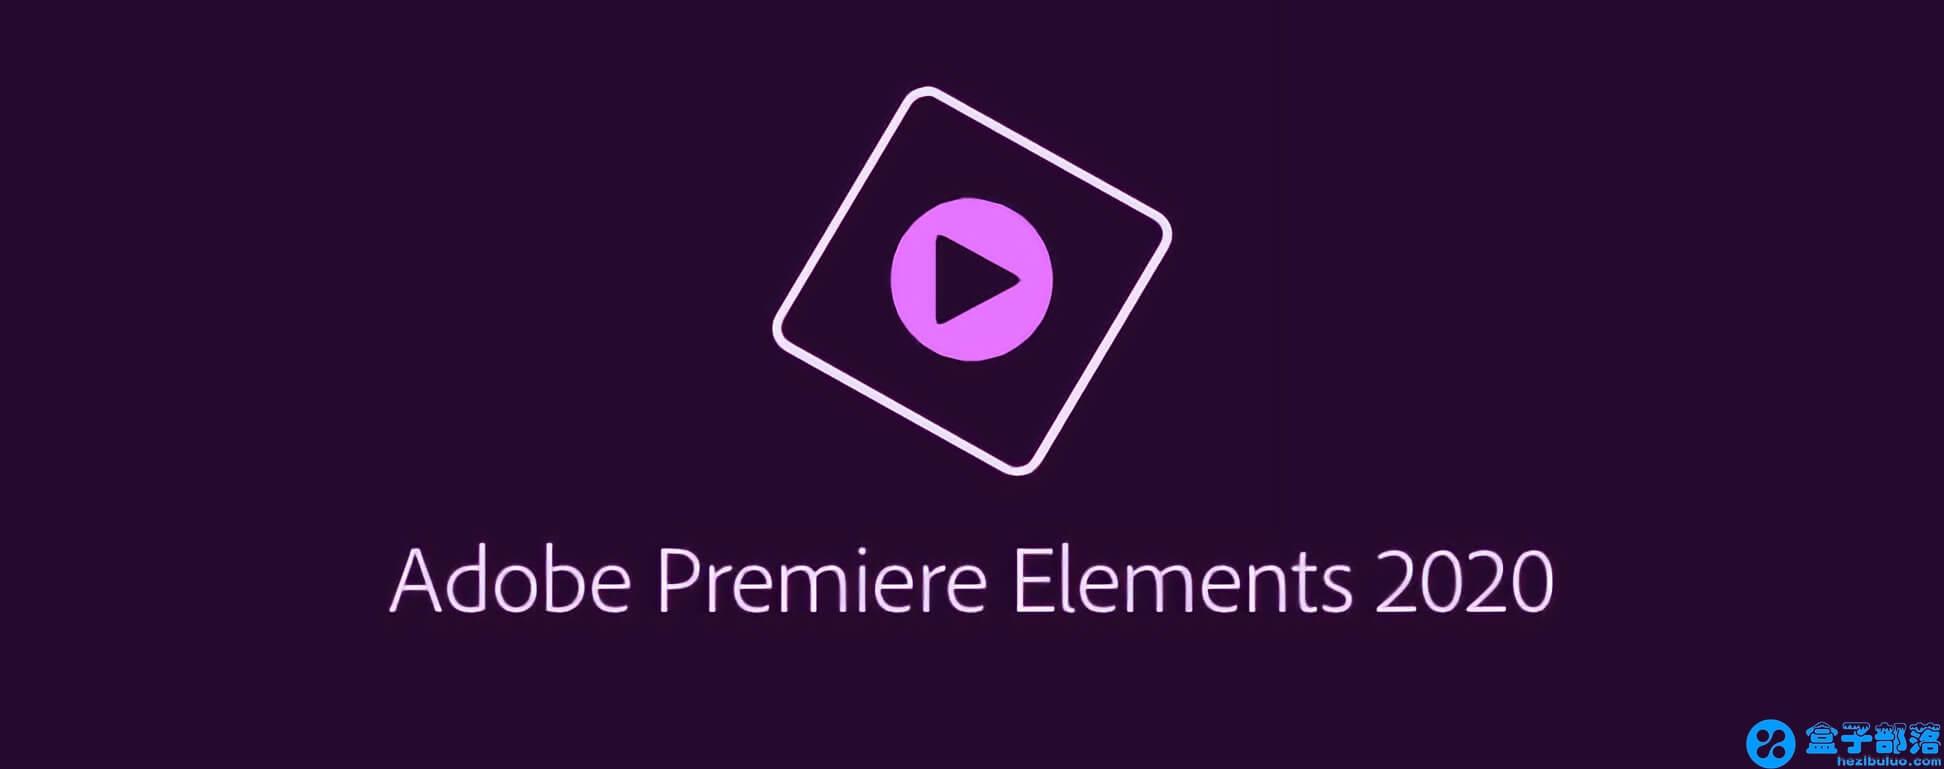 adobe elements premiere 2020